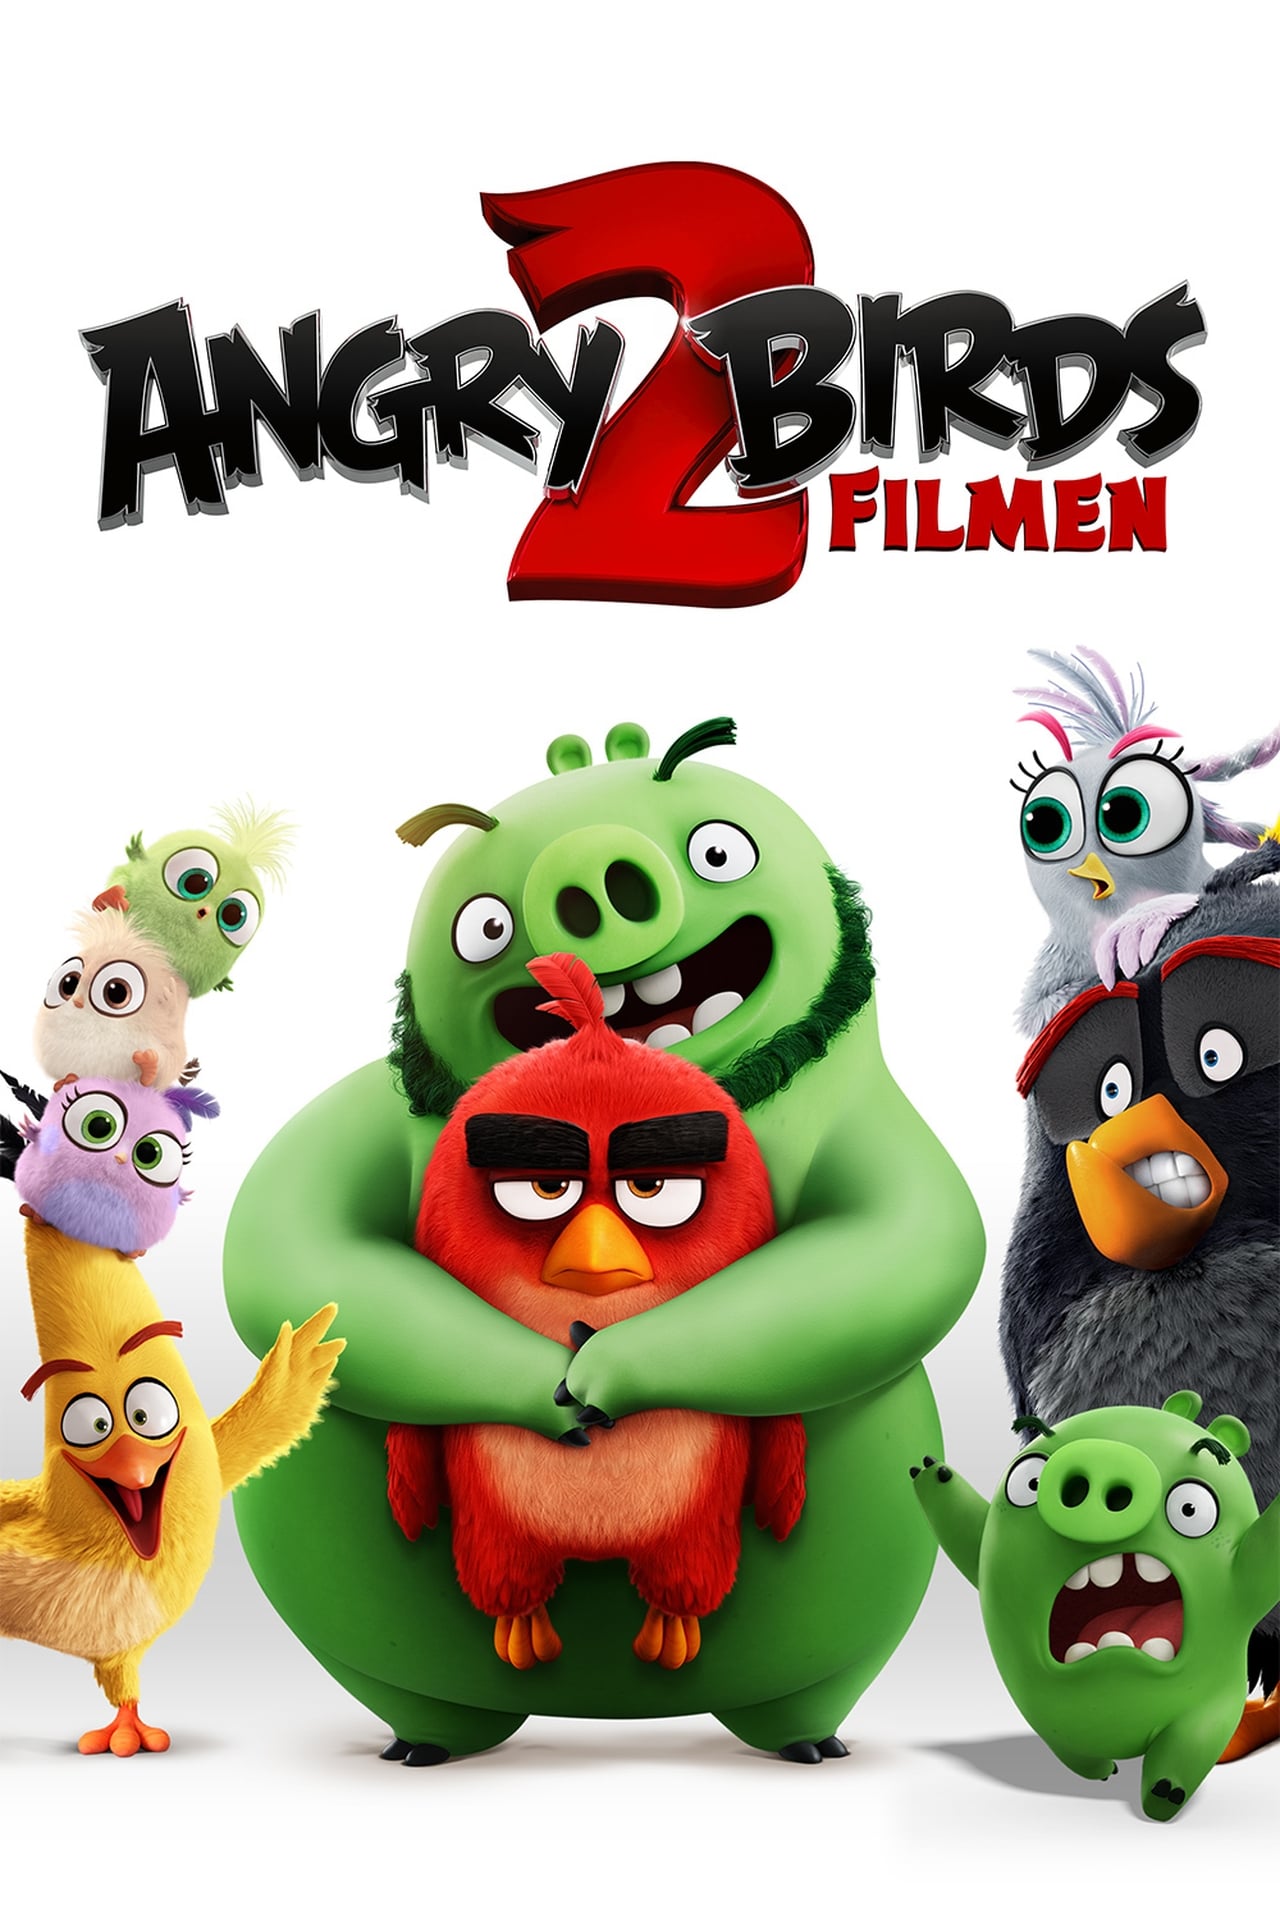 watch angry birds 2 movie full movie free